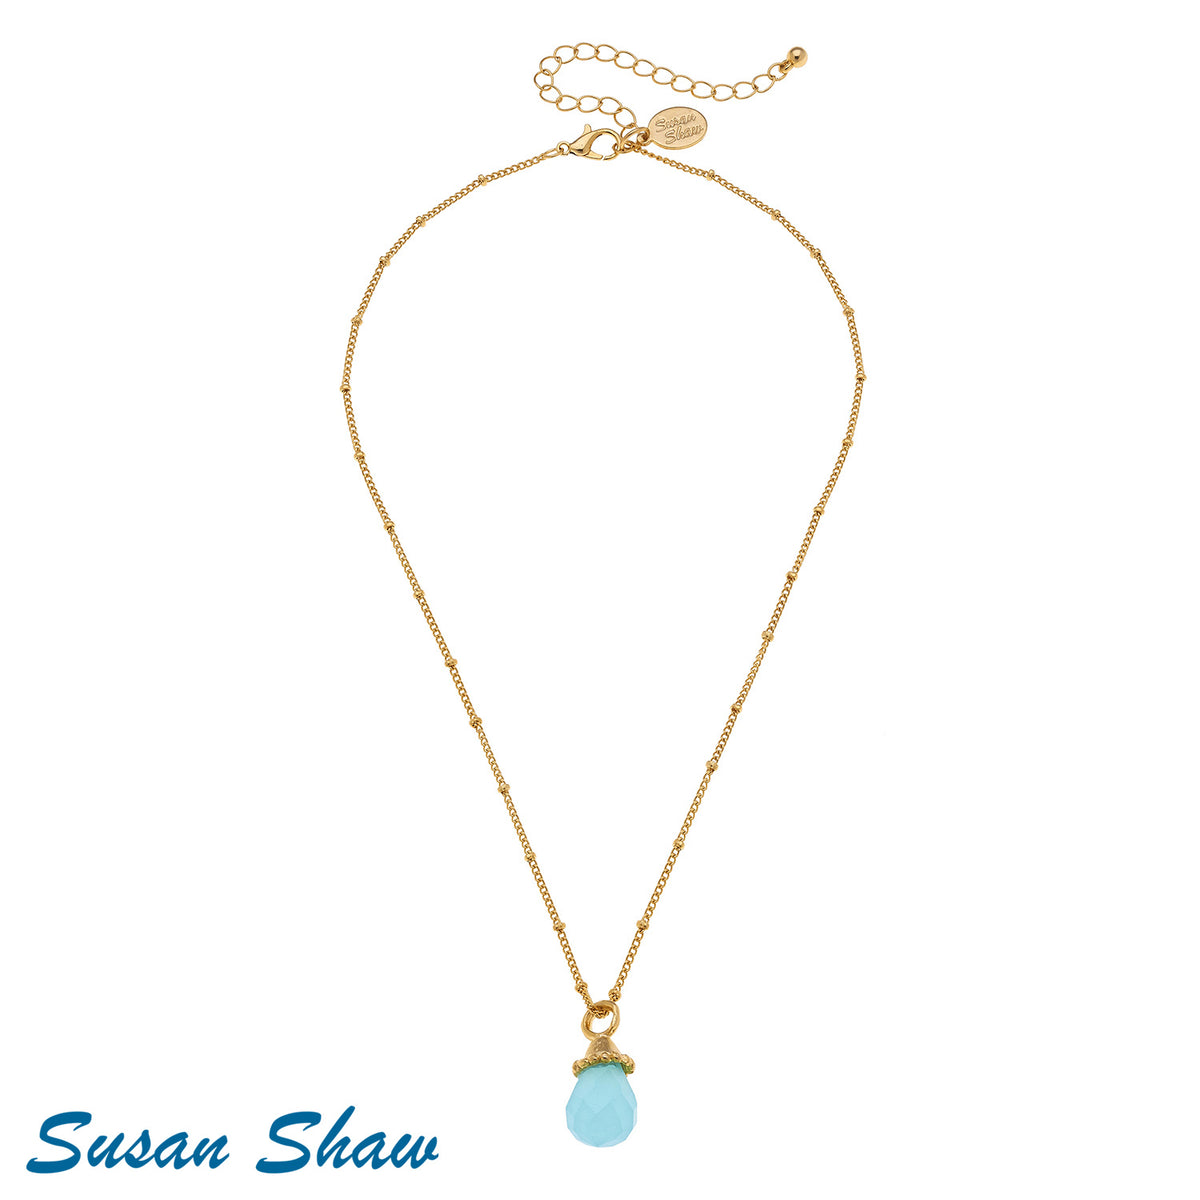 SUSAN SHAW Aqua Quartz on Dainty Gold Dipped Chain Necklace